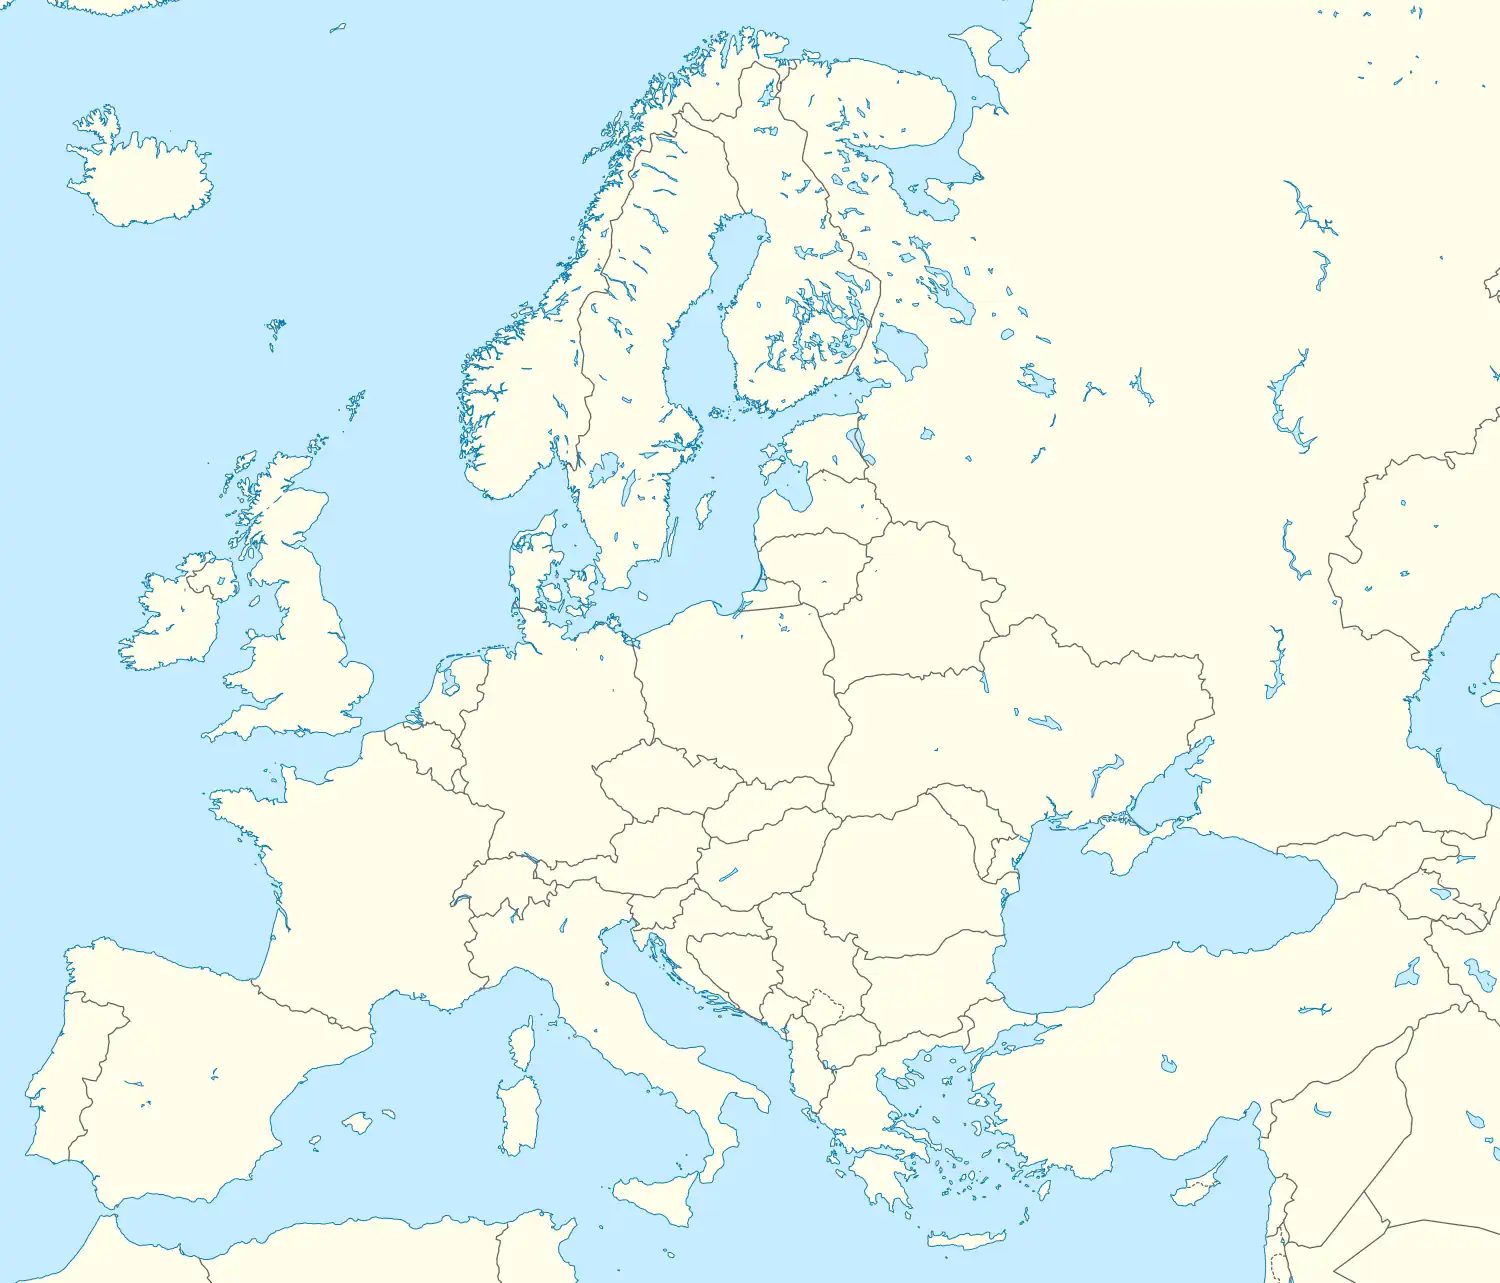 Sevastopol is located in Europe